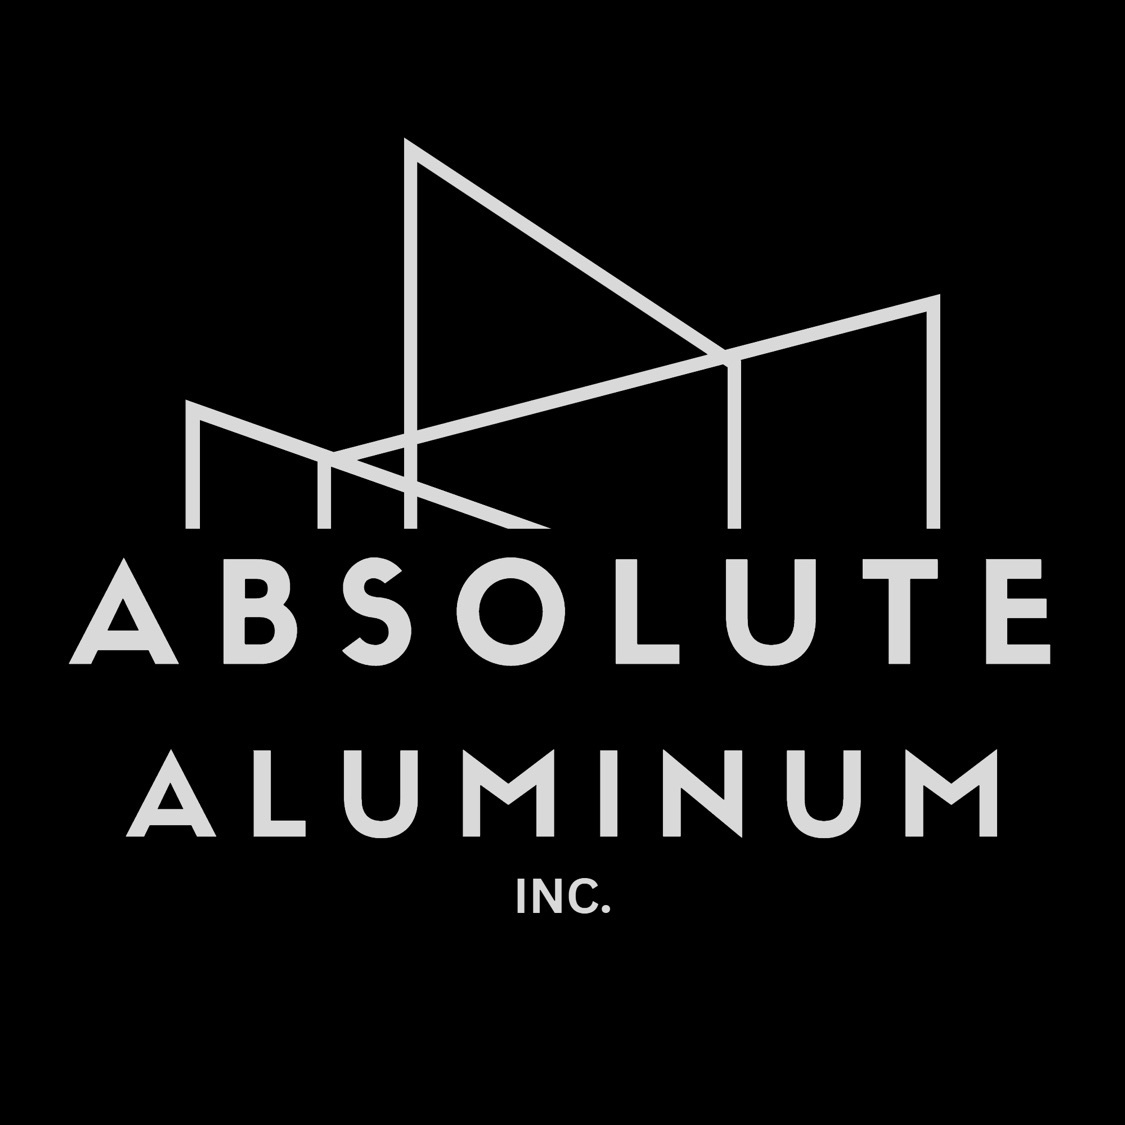 Absolute Aluminum Inc's logo